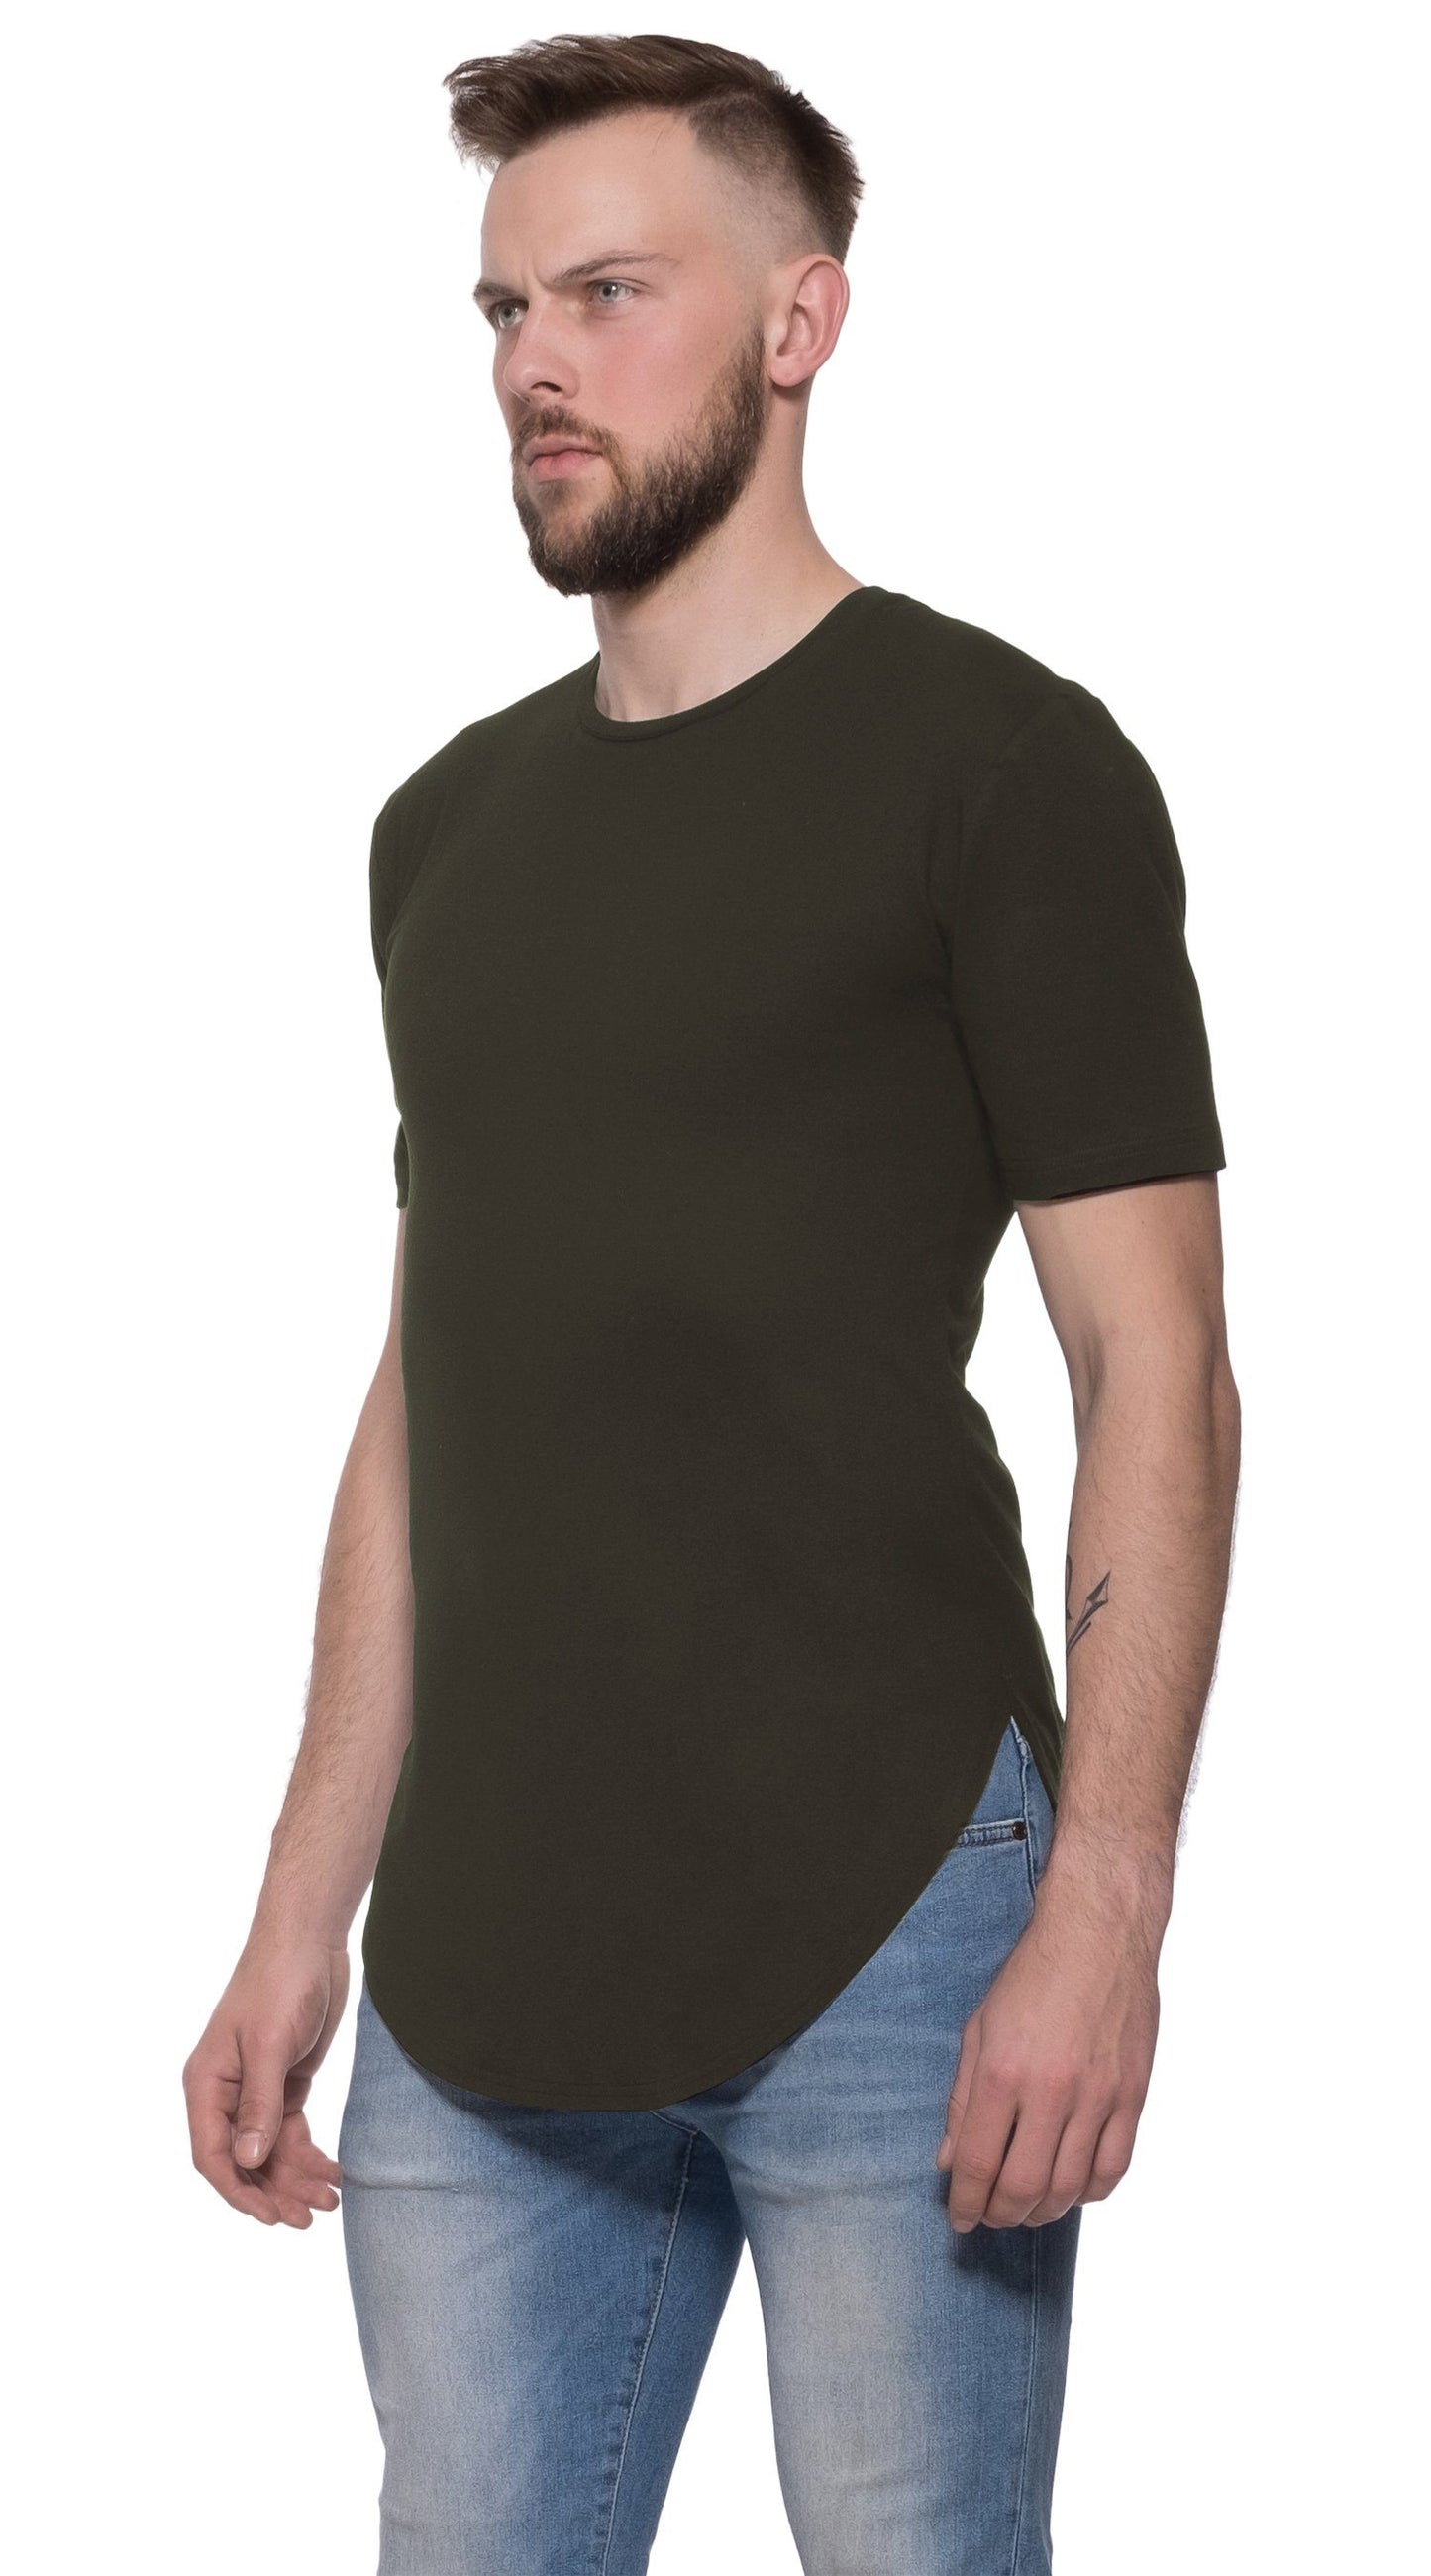 TheG Man Viscose Basic 2/2 dlouhé tričko // khaki